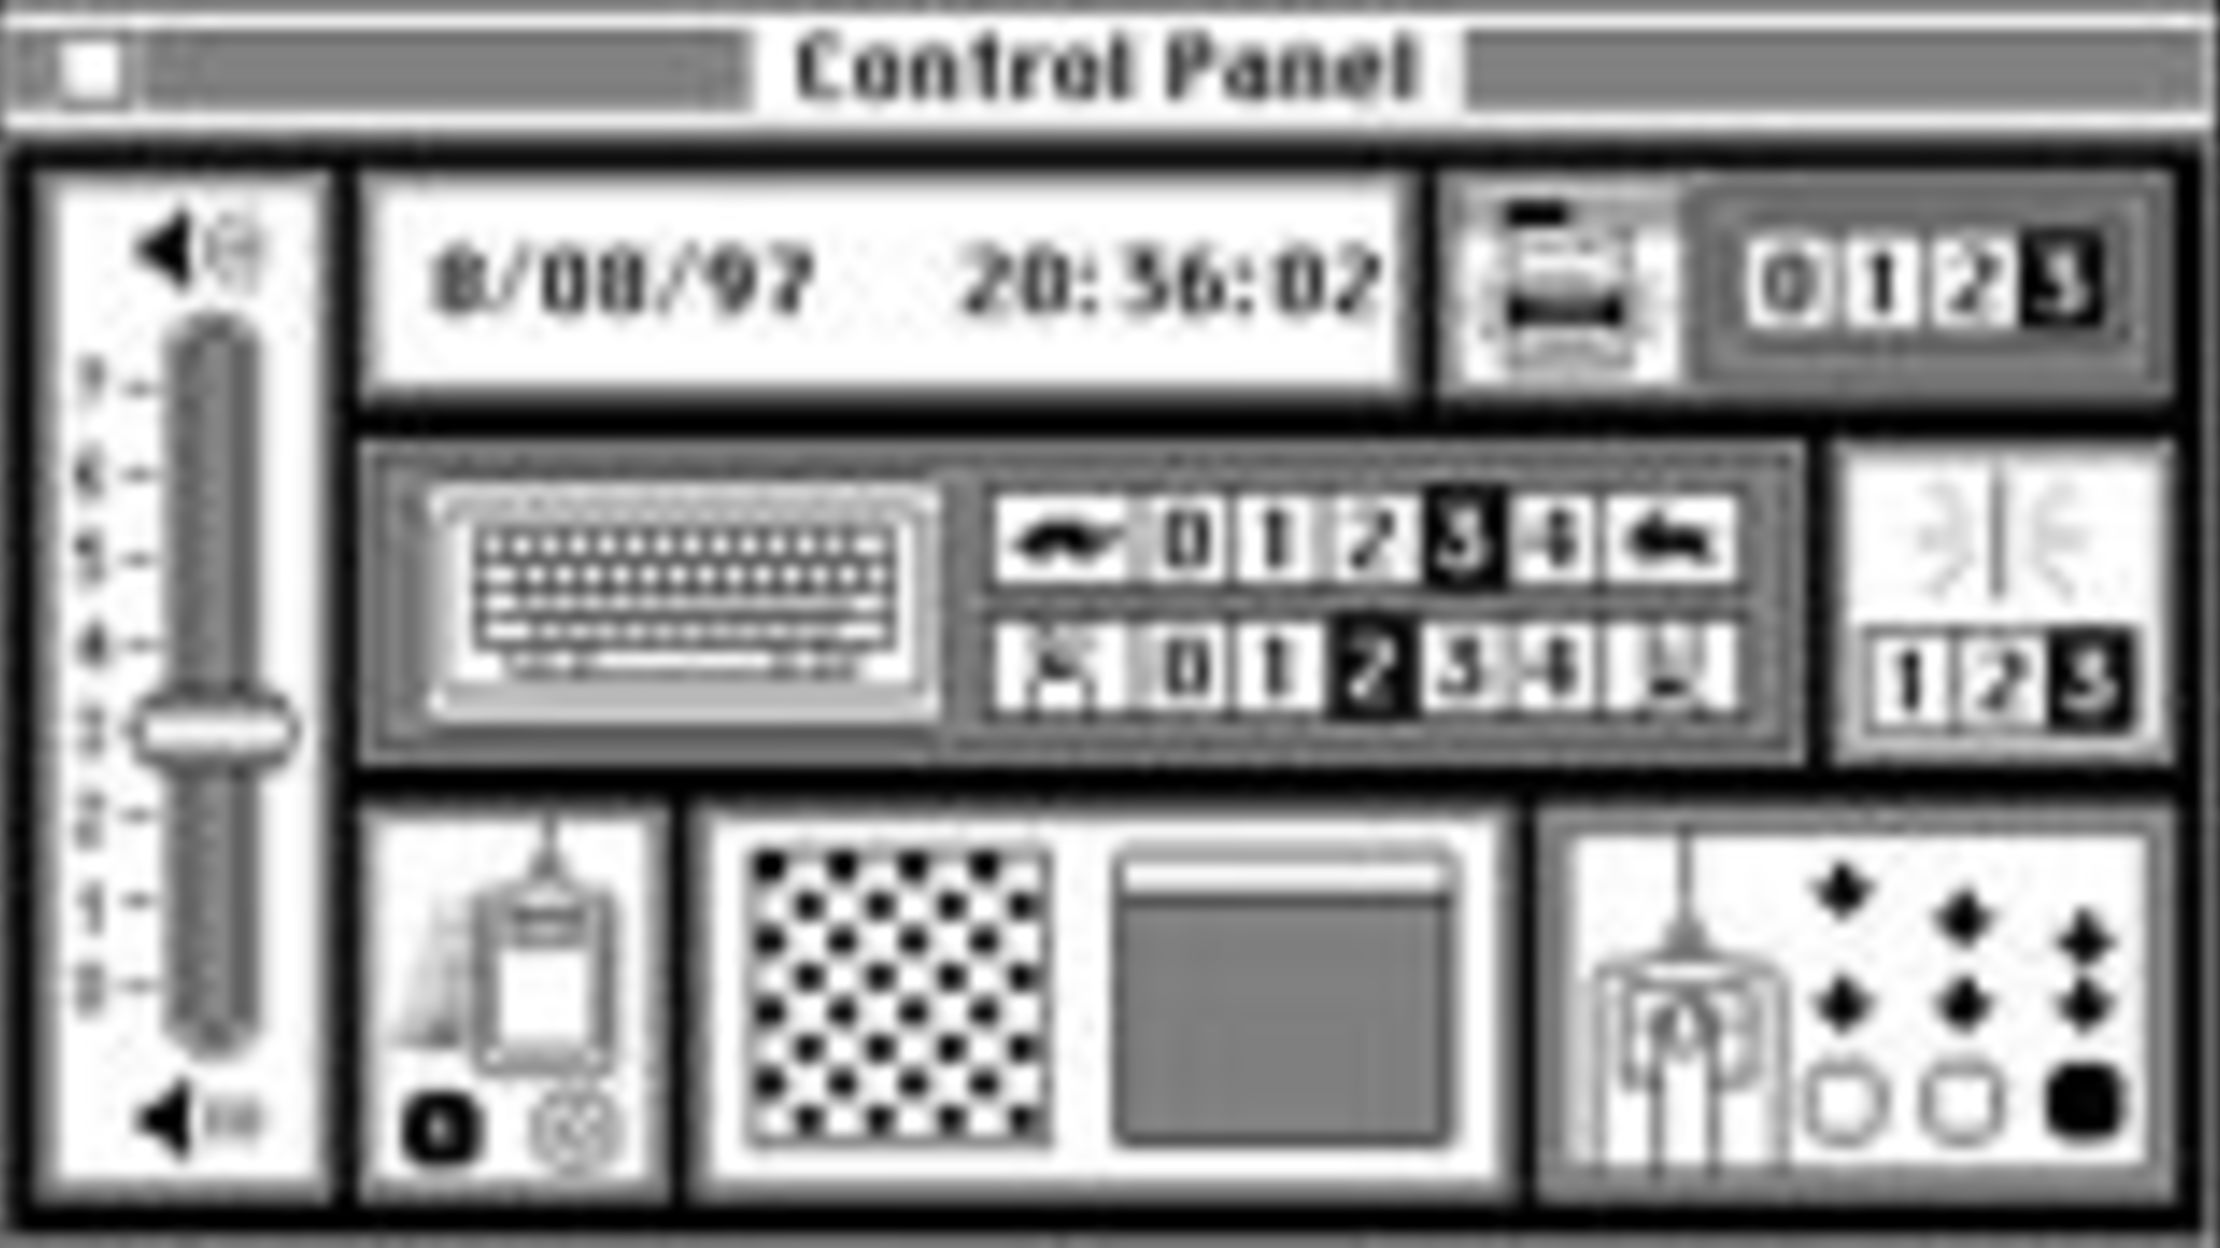 control panel operation panel mac